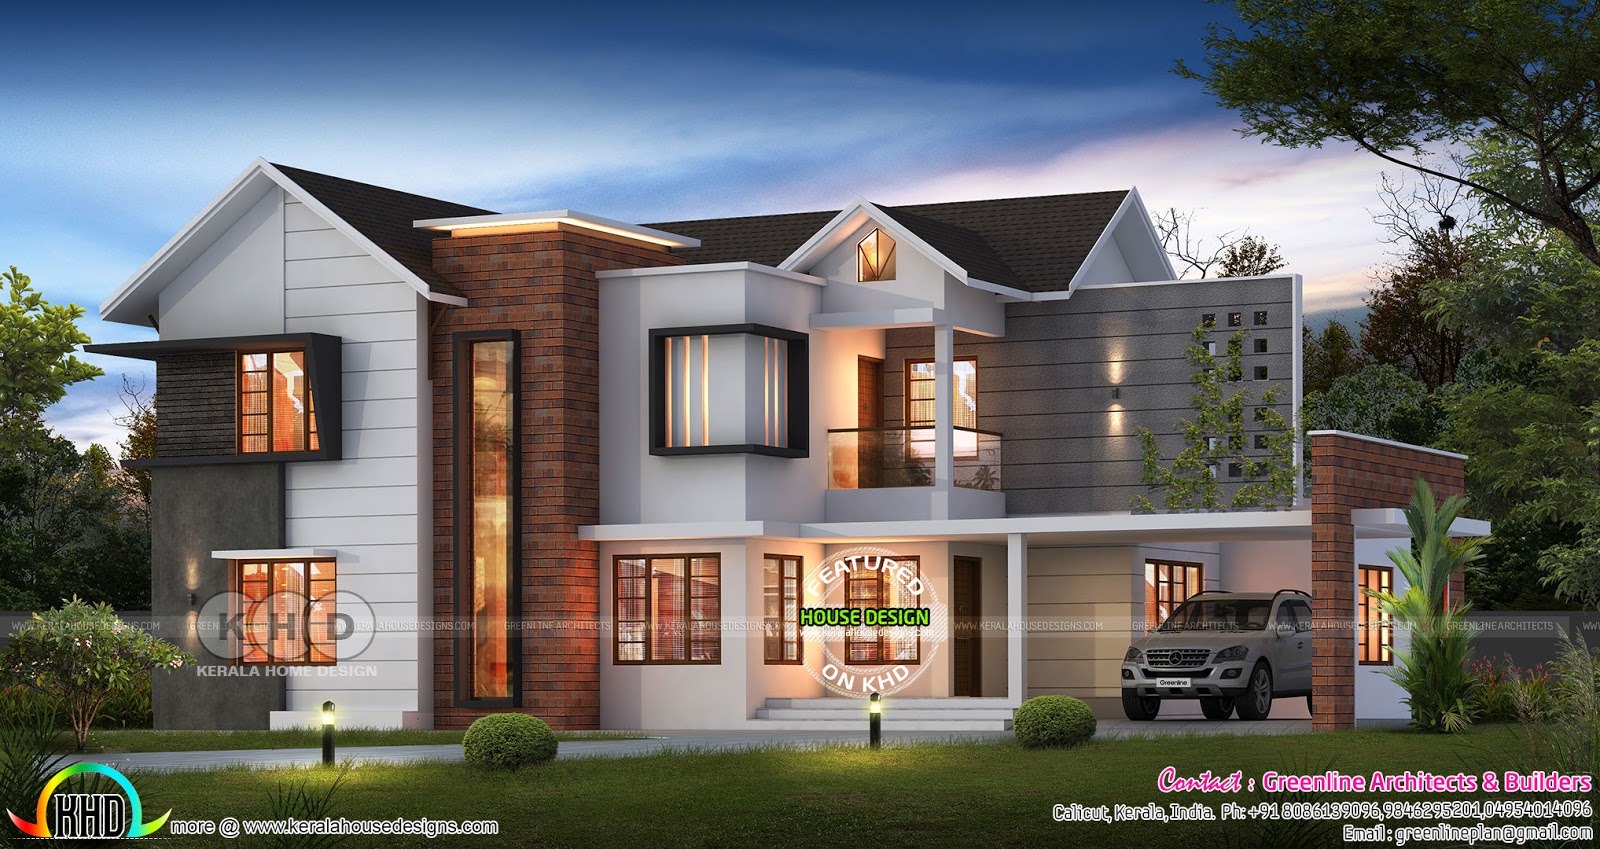  5  bedroom  modern house  plan  in 4100 sq ft Kerala  home  